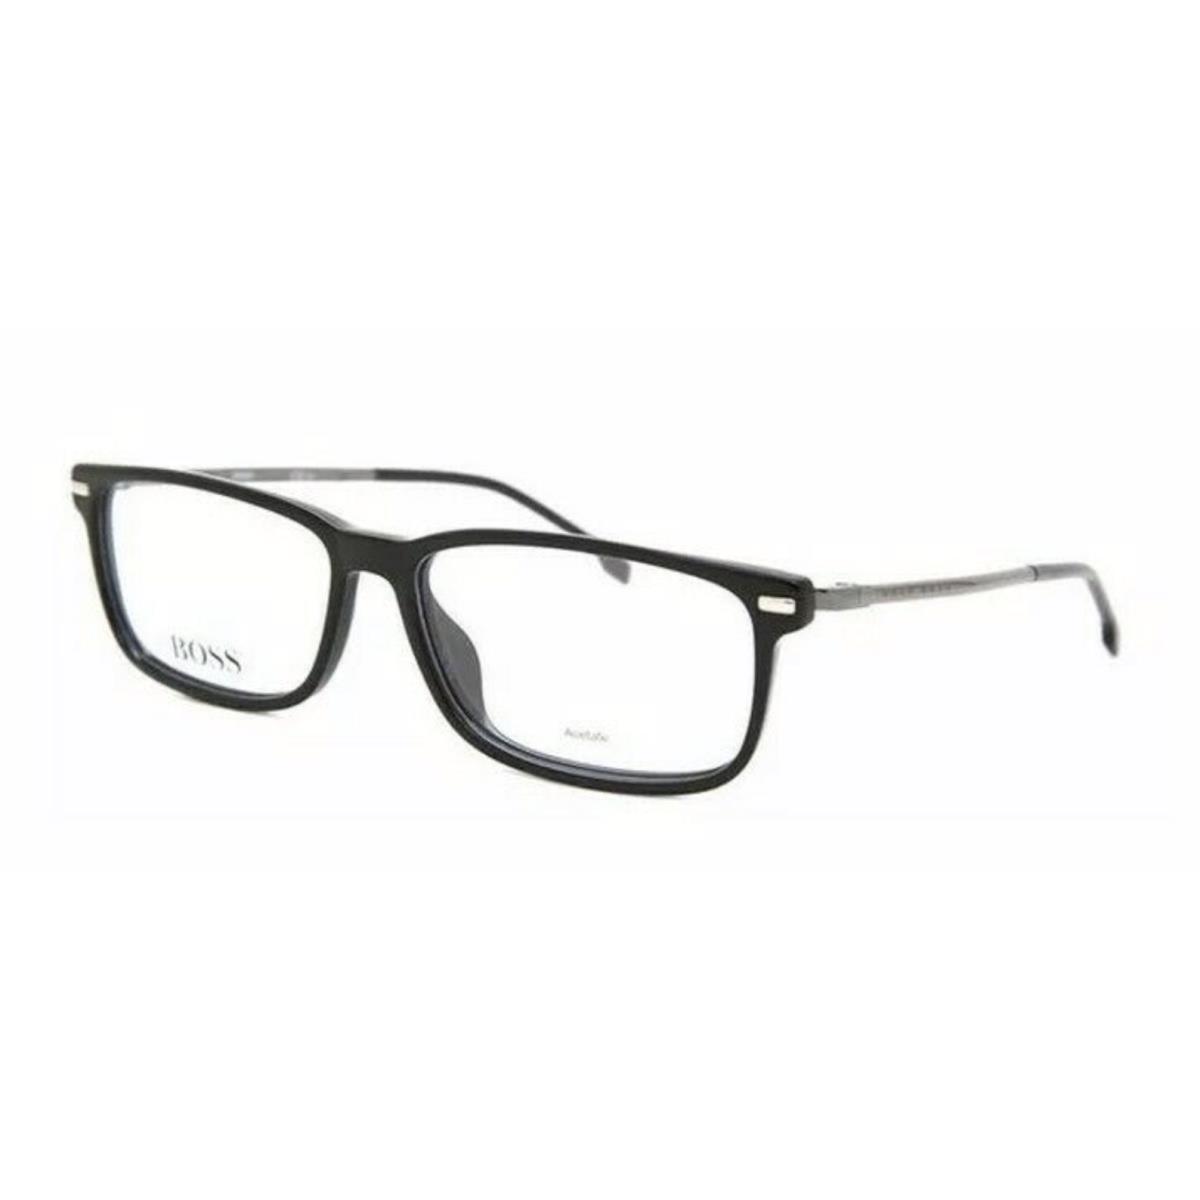 Hugo Boss Rx-able Eyeglasses Boss 0933 807 55-15 Shiny Black Silver Frames - Frame: Shiny Black / Silver-Chrome, Lens: Demos with Imprint